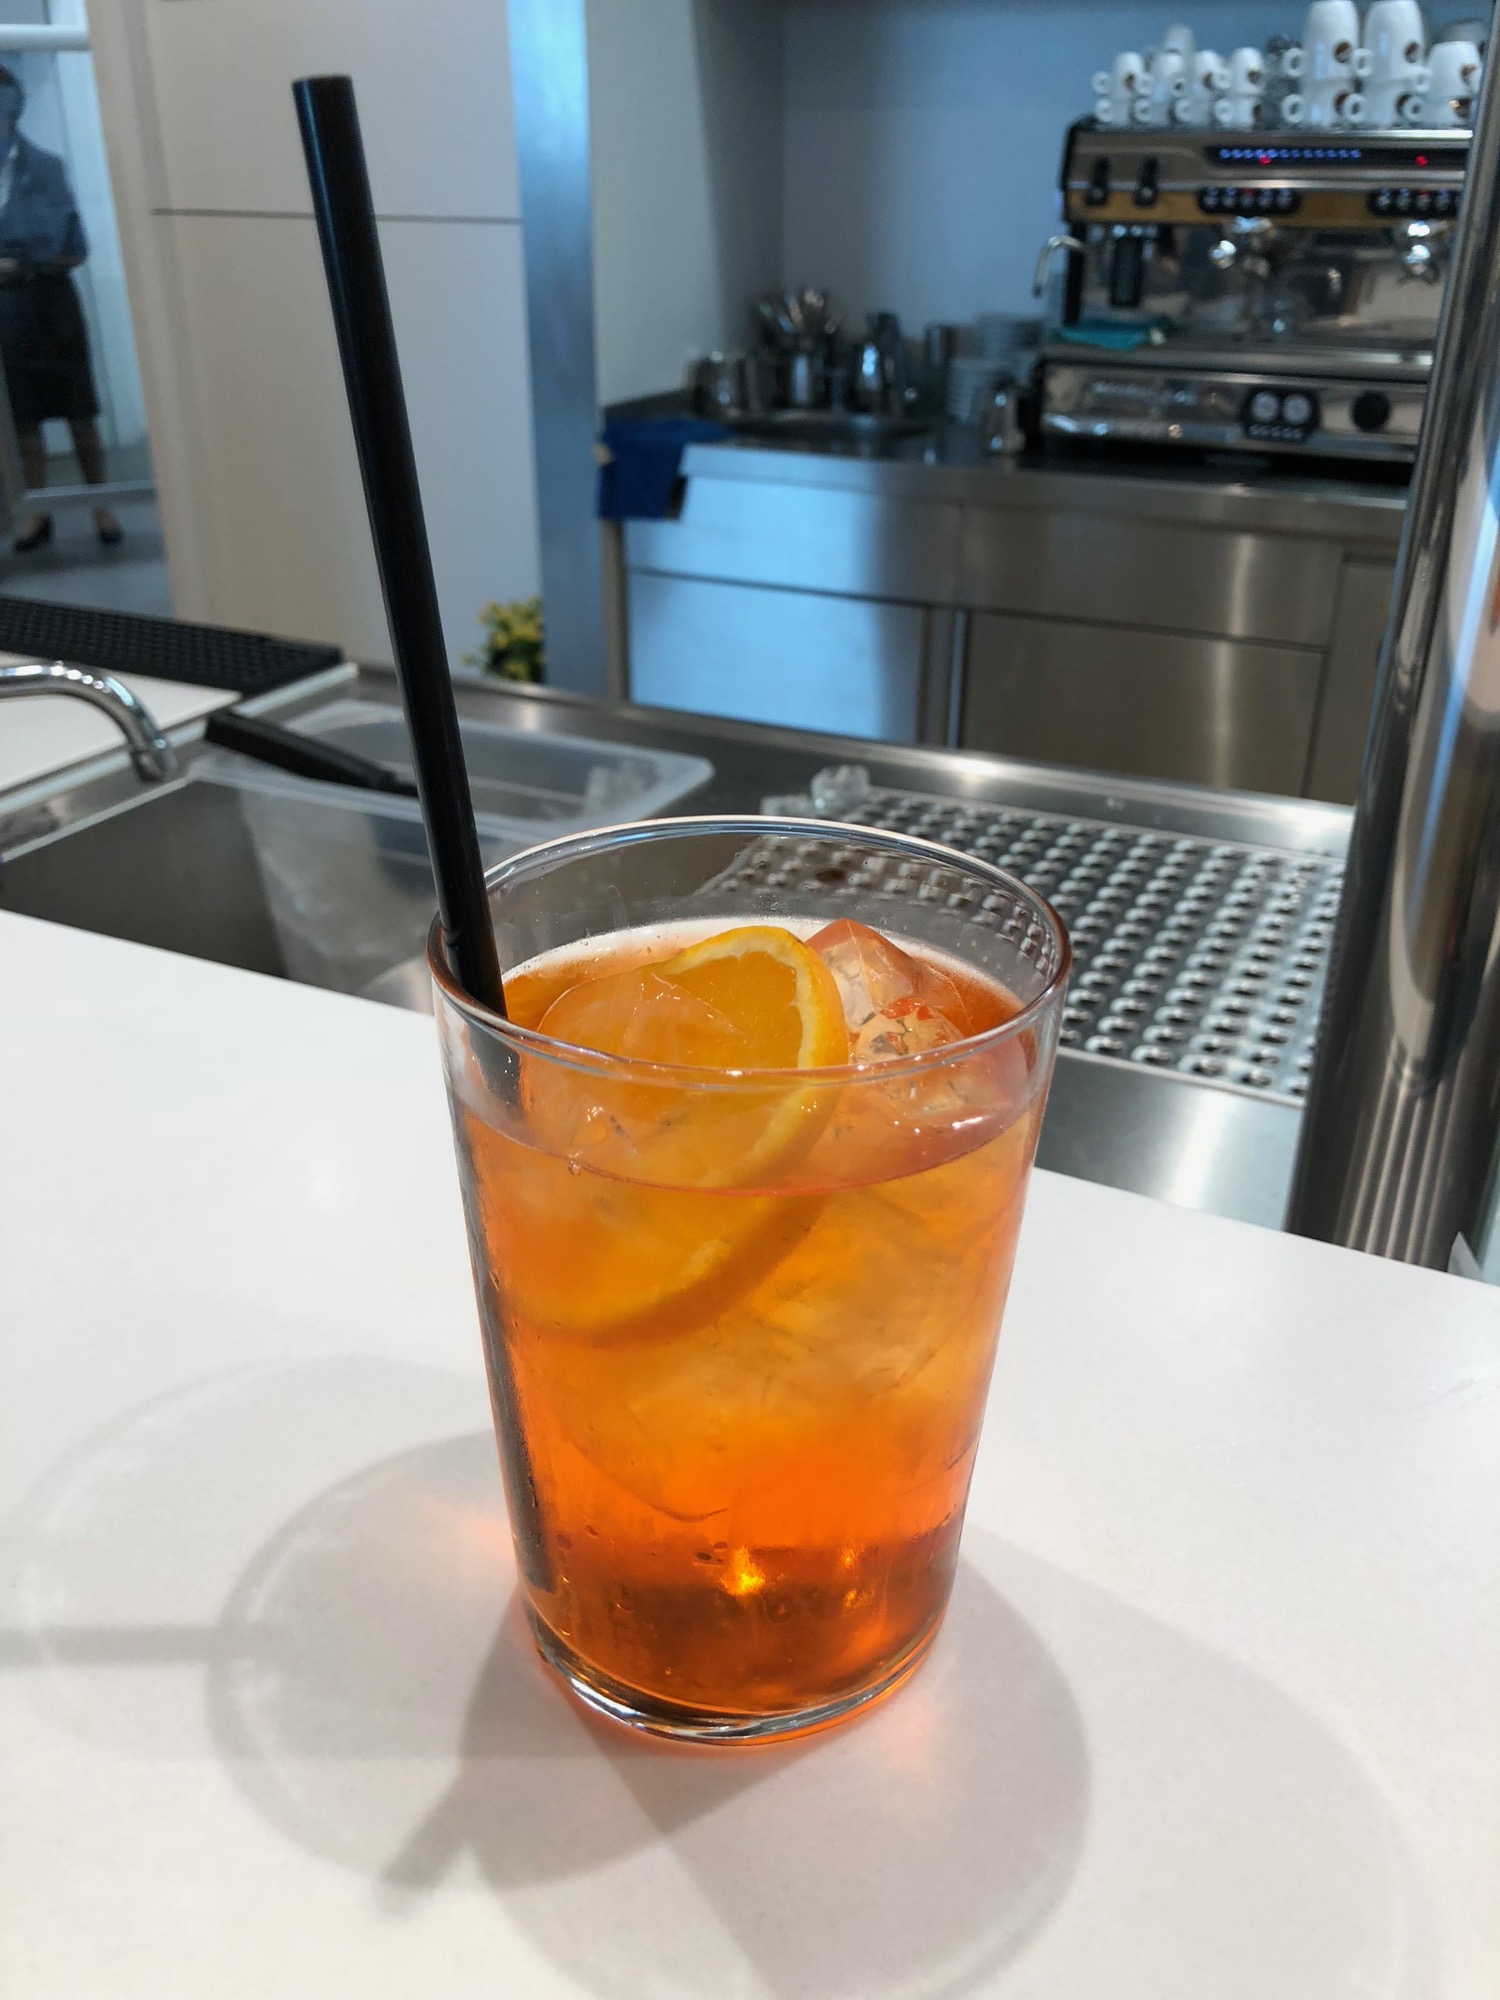 a glass of orange liquid with a straw